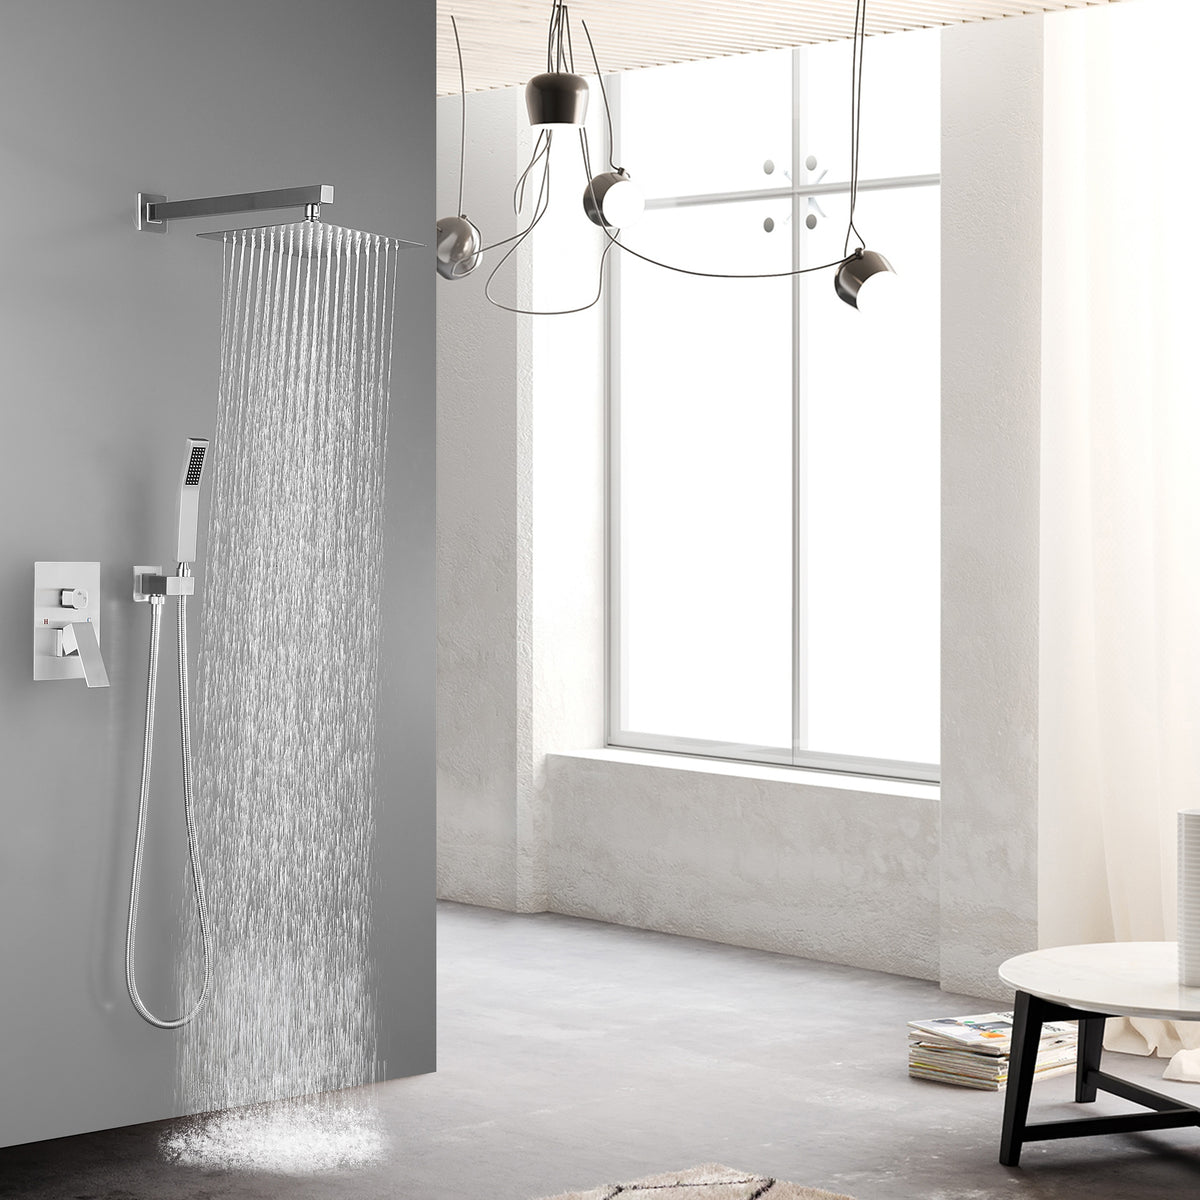 10 inch Shower Head Bathroom Luxury Rain Mixer Shower Complete Combo Set Wall Mounted - Brushed Nickel